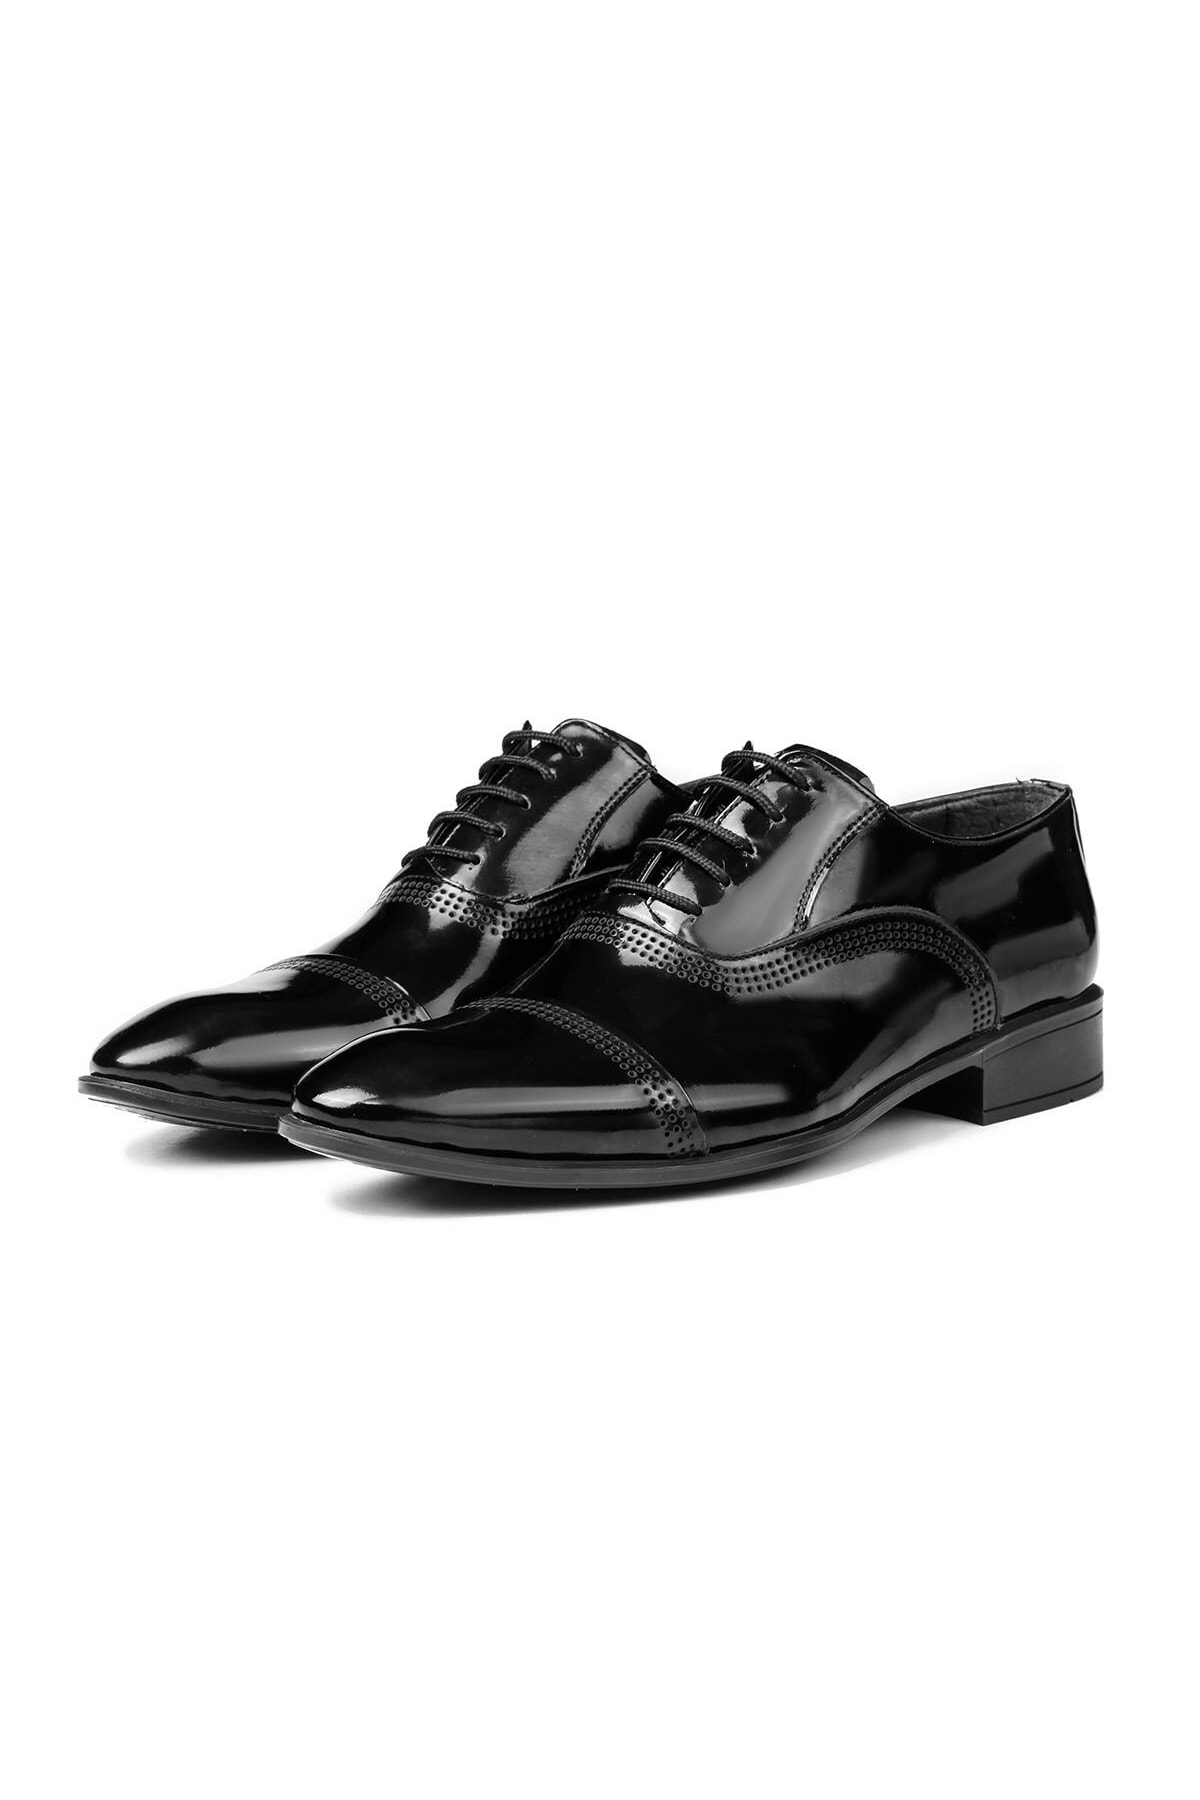 Levně Ducavelli Serious Genuine Leather Men's Classic Shoes, Oxford Classic Shoes